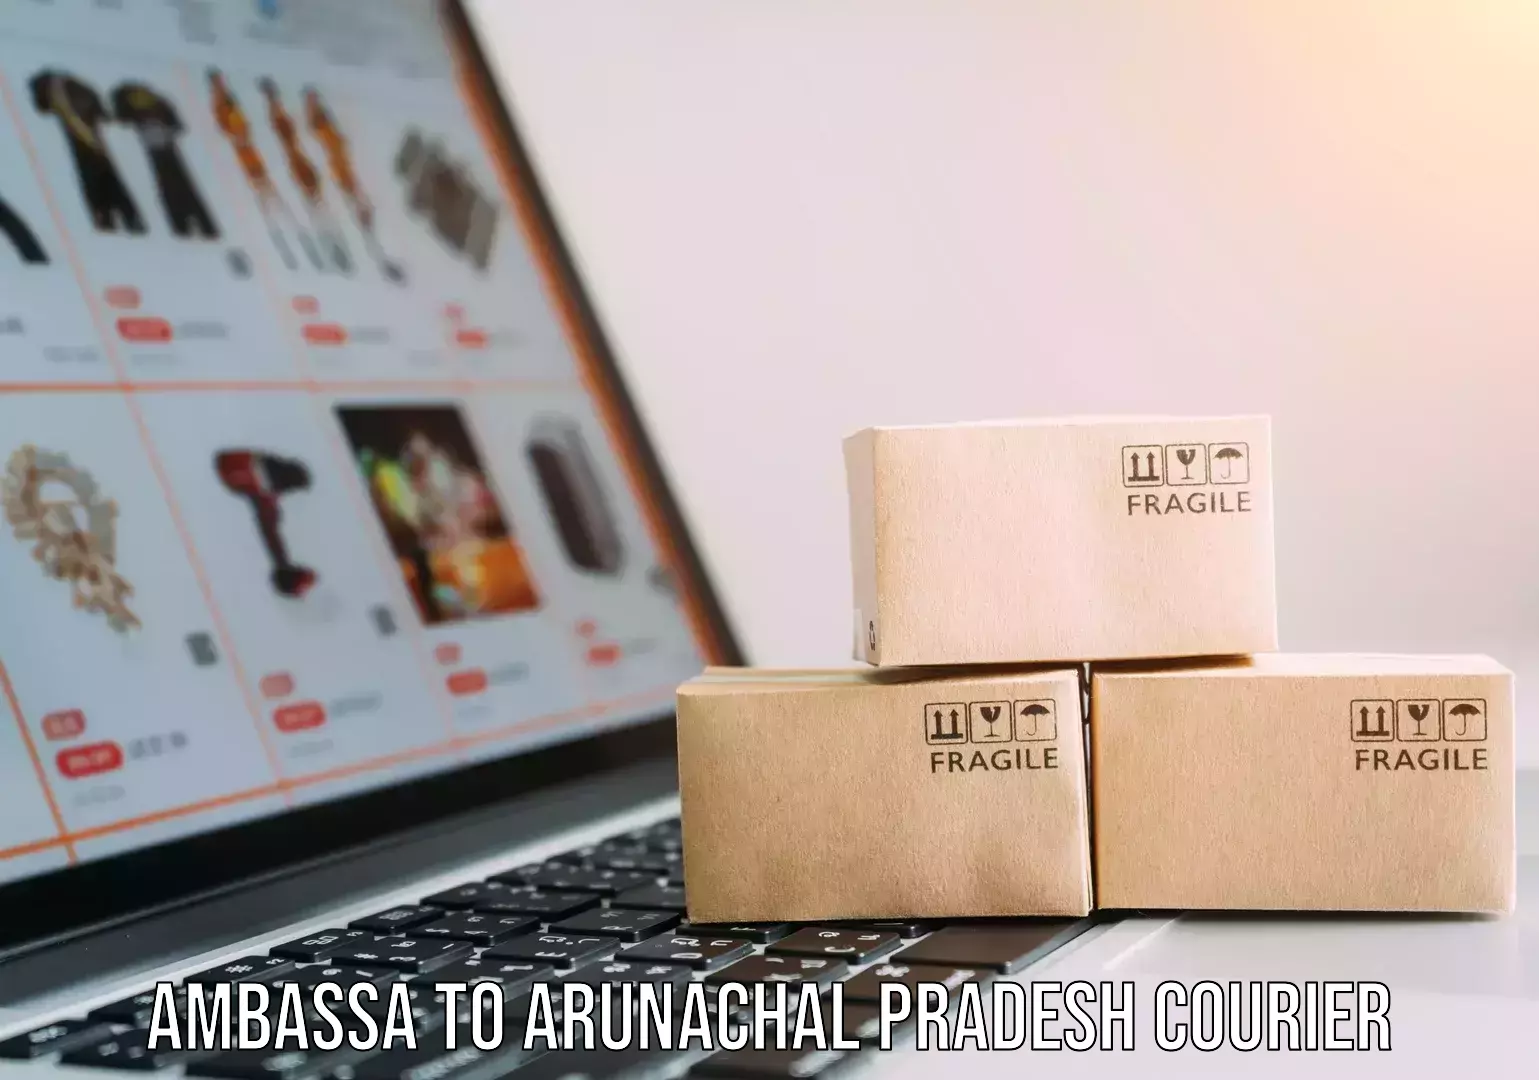 Pharmaceutical courier Ambassa to Arunachal Pradesh